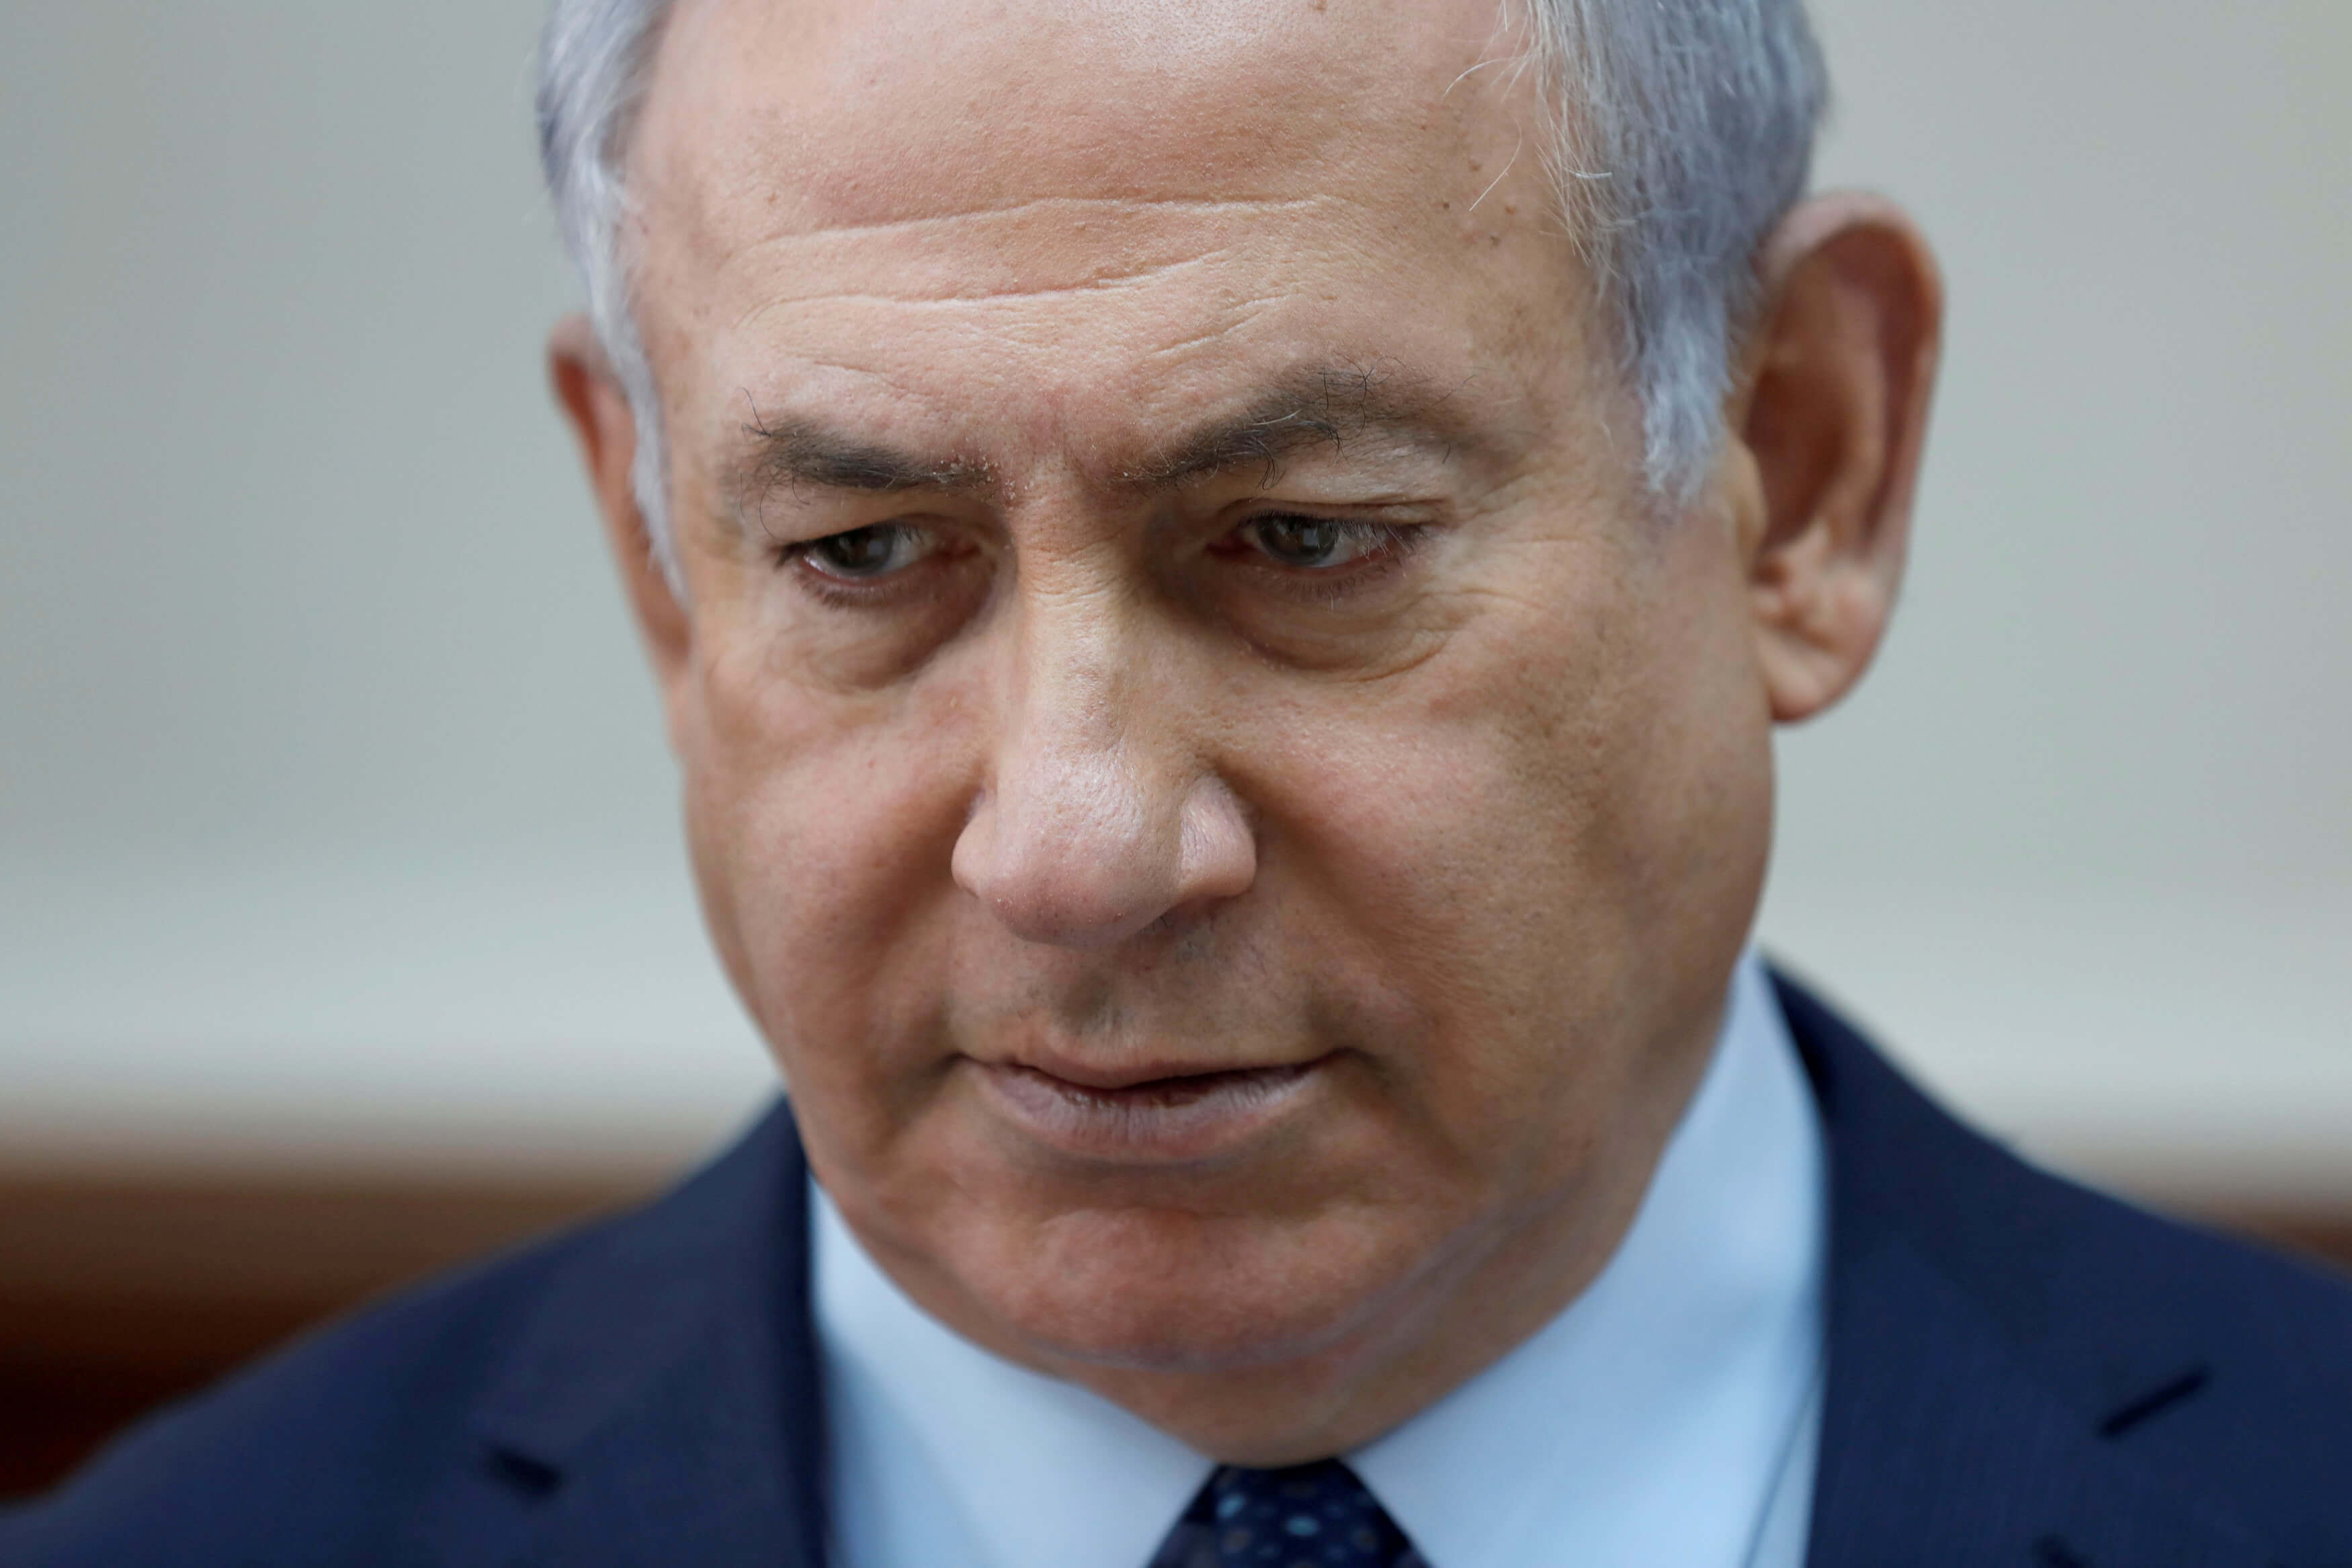 Israel Prime Minister faces several corruption scandals.